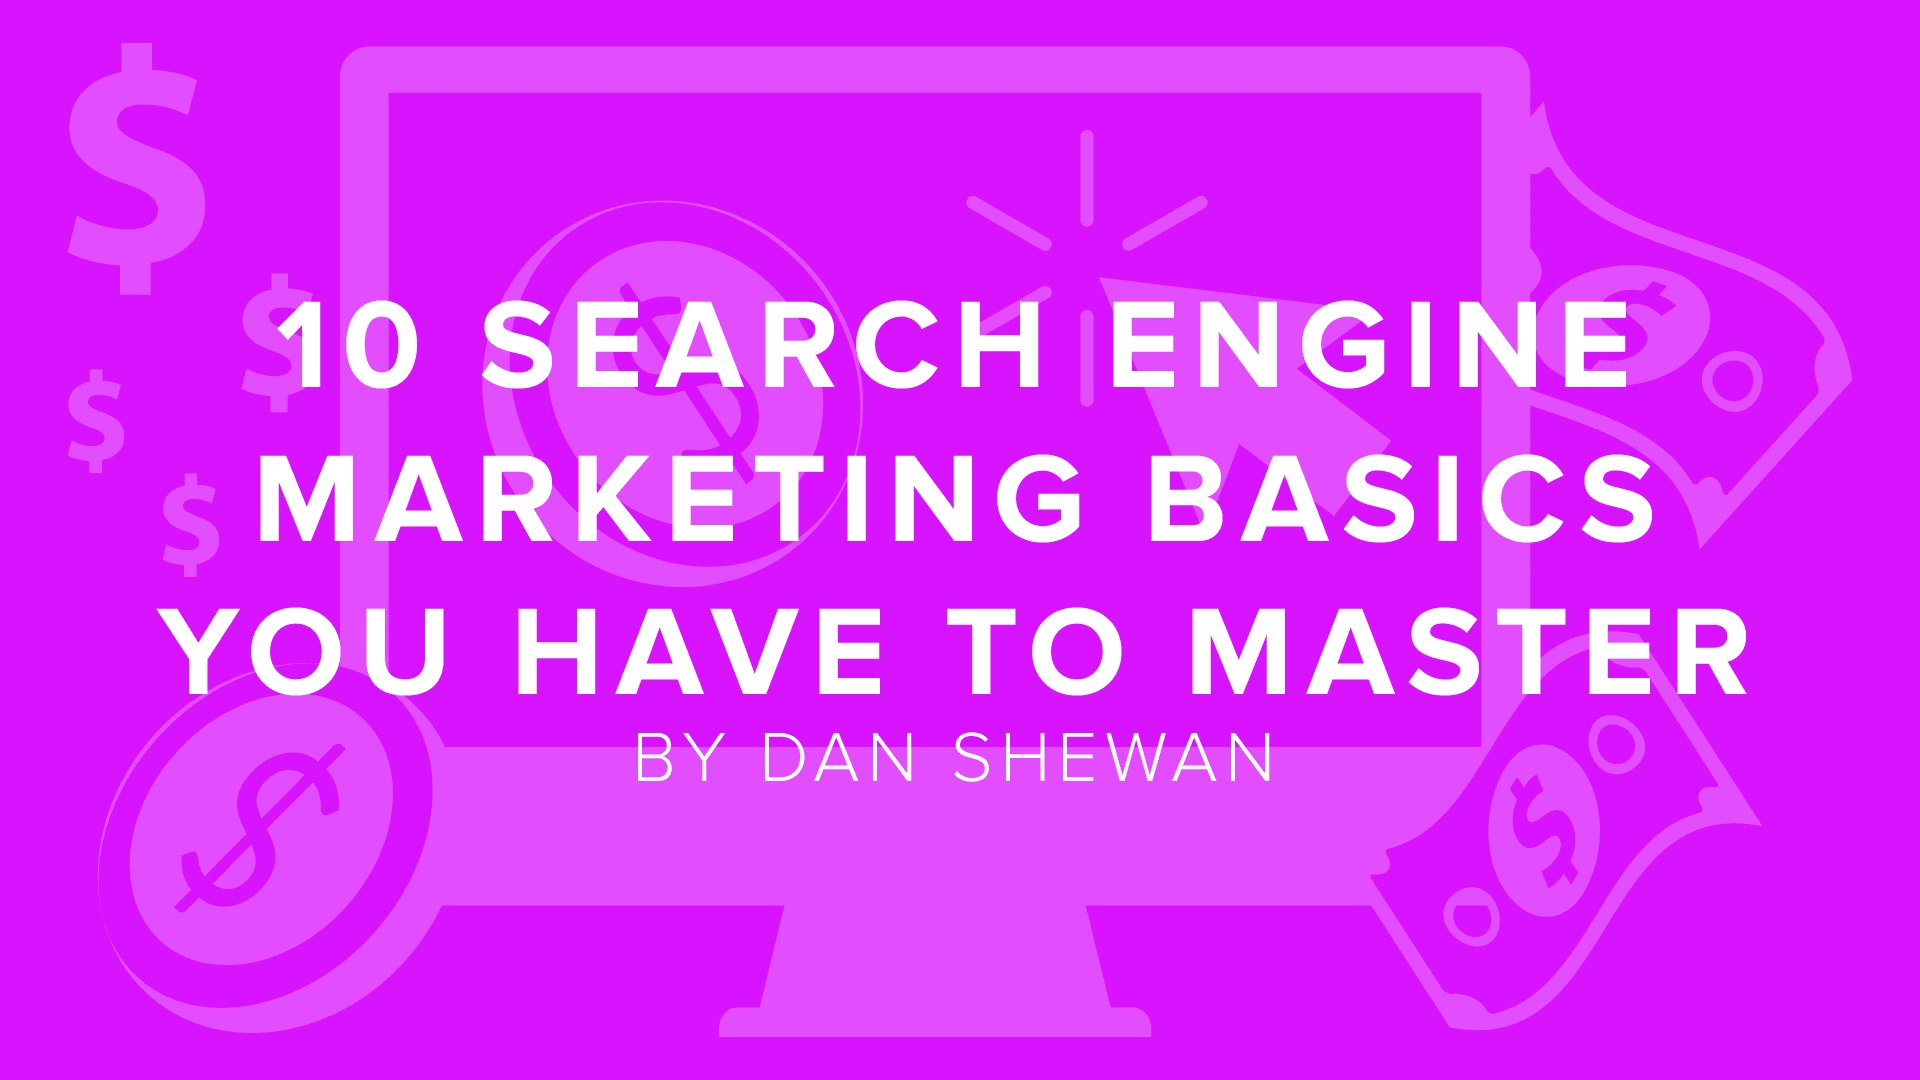 DigitalChalk: 10 Search Engine Marketing Basics You Have to Master by Dan Shewan